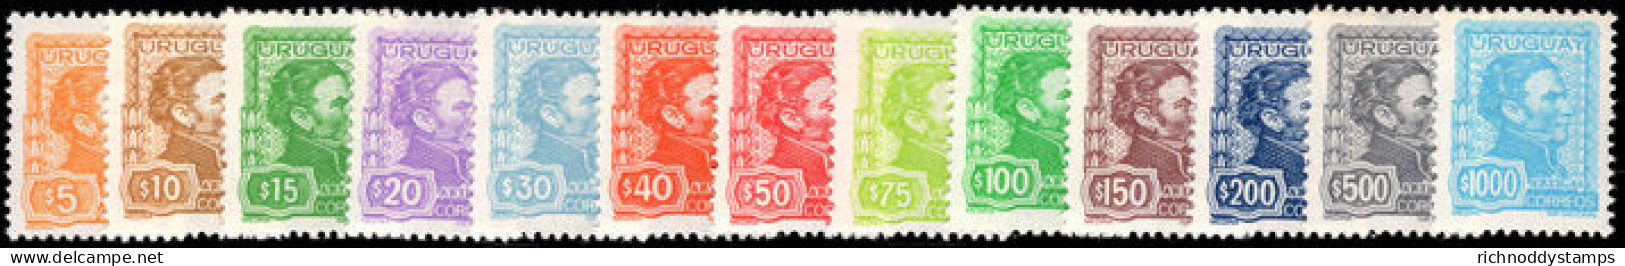 Uruguay 1972 General Jose Artigas Set Unmounted Mint. - Uruguay